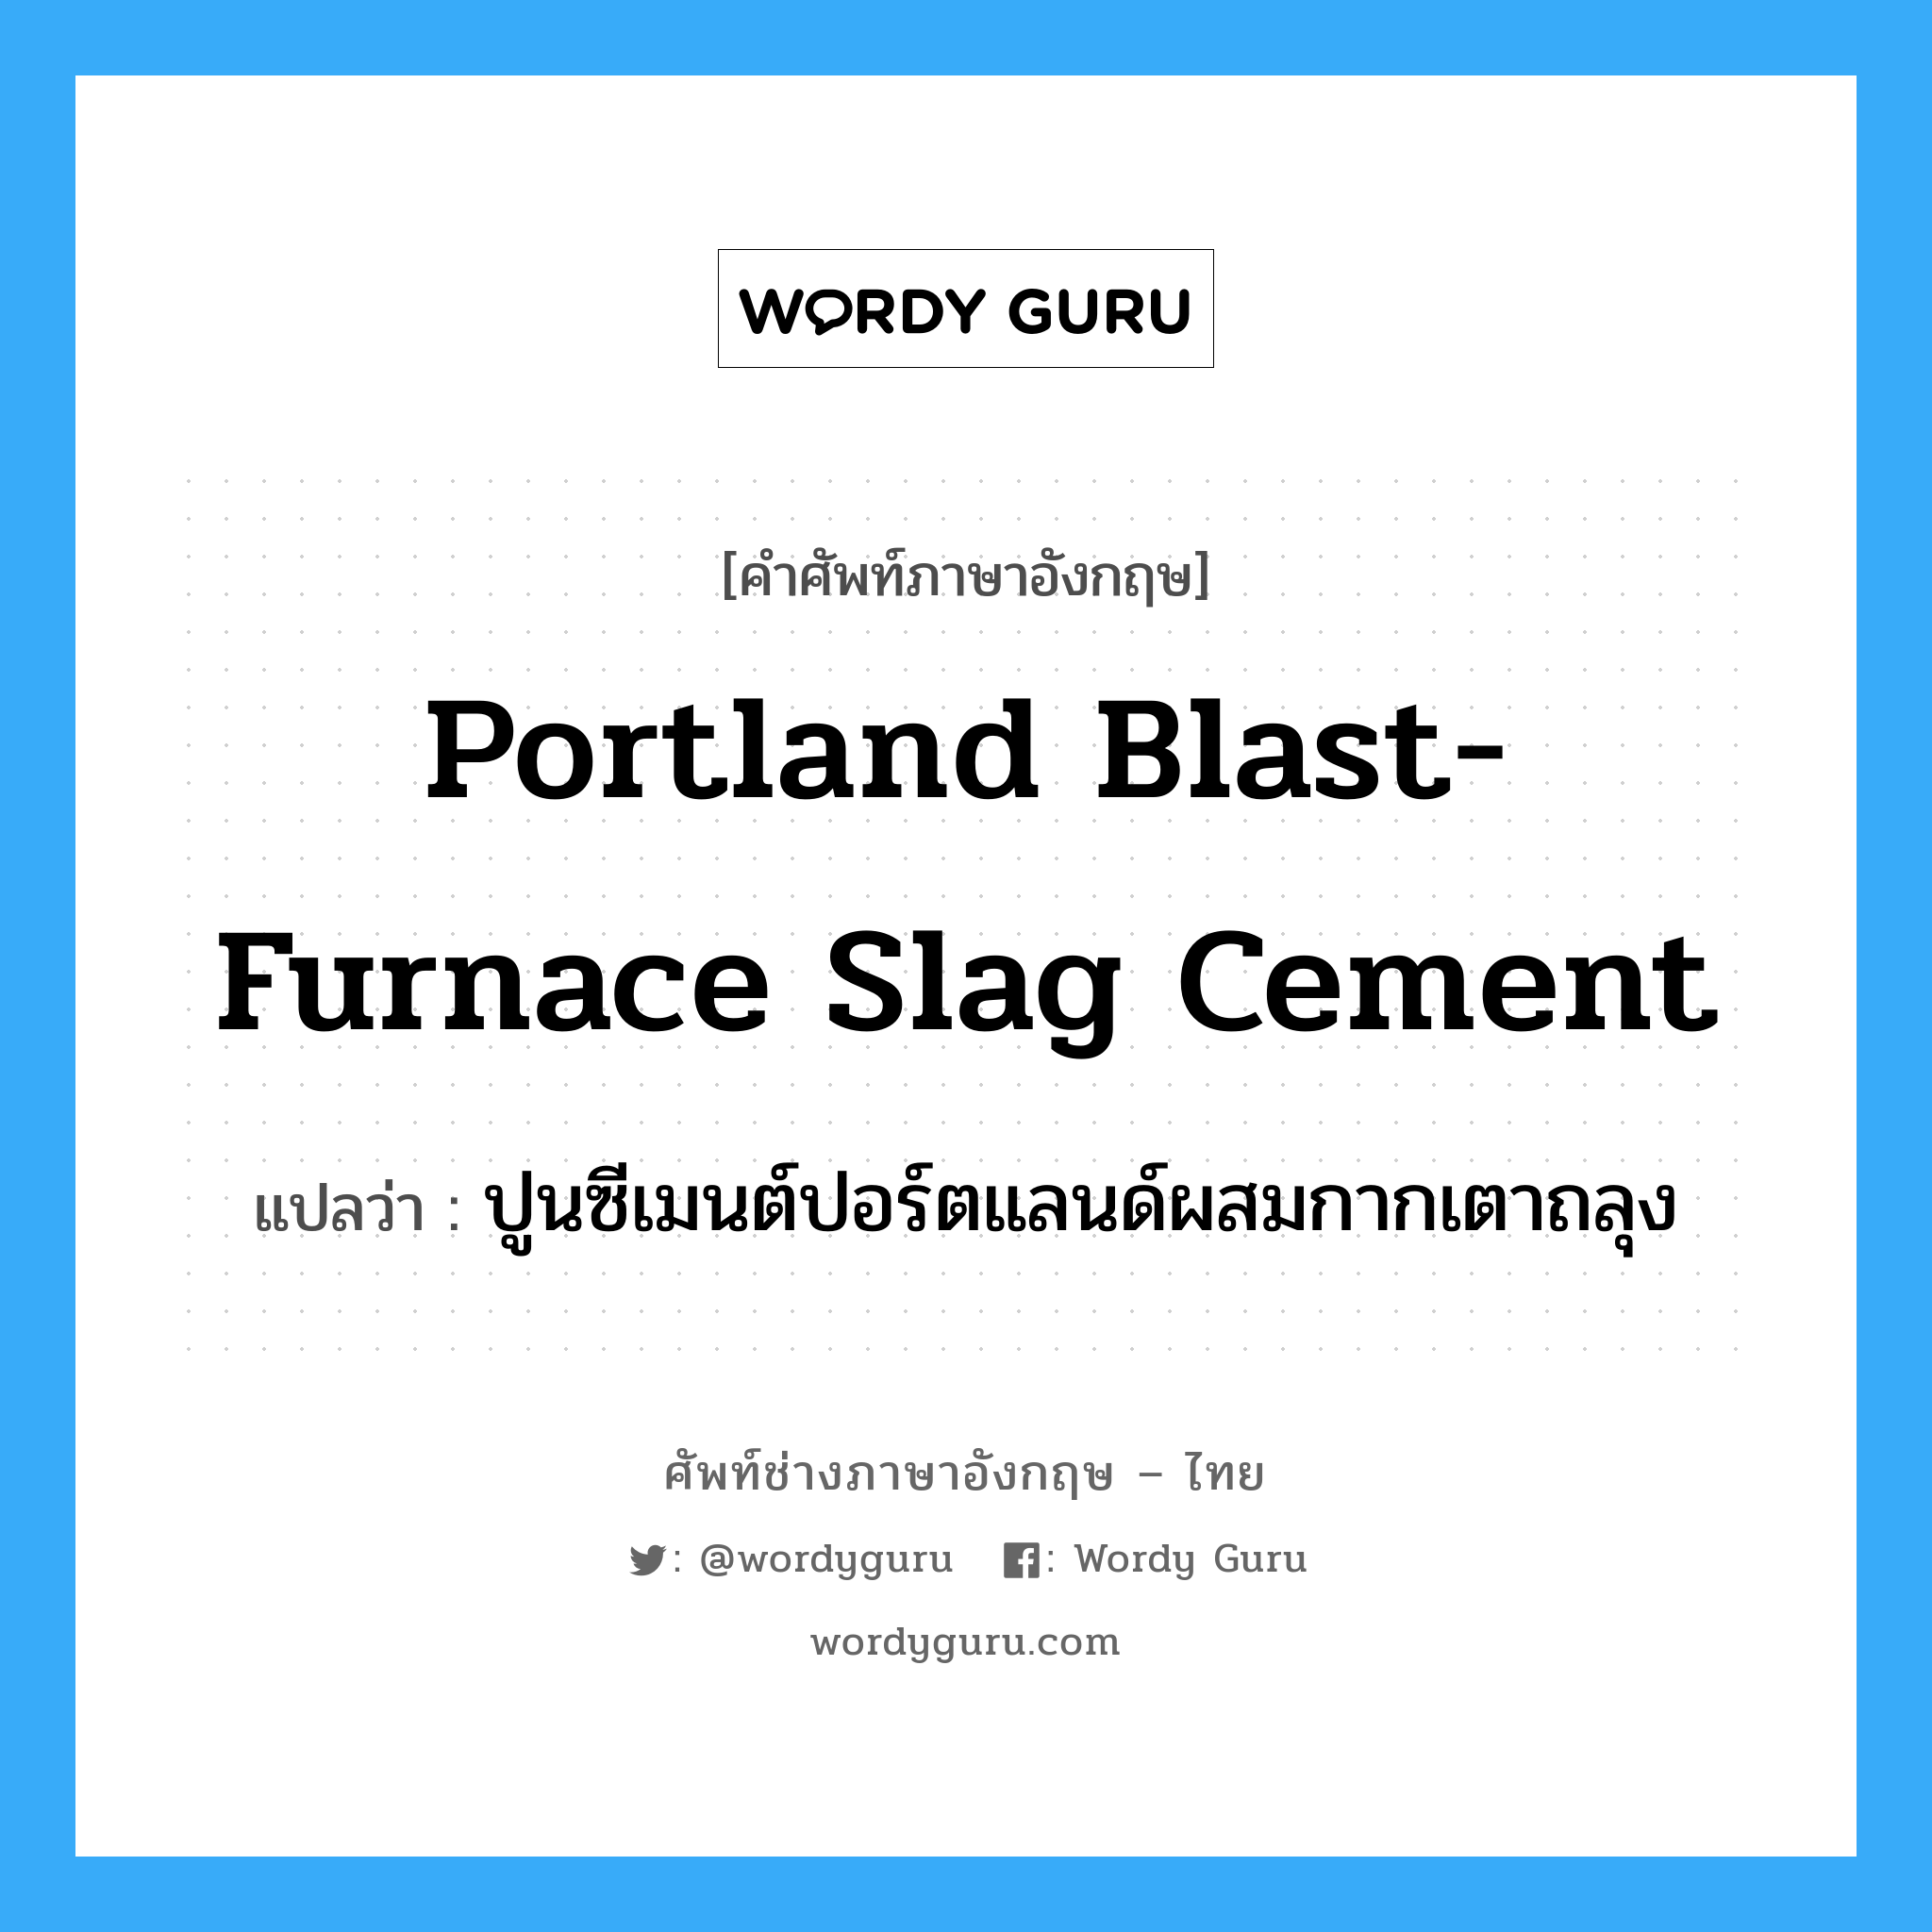 portland blast-furnace slag cement แปลว่า?, คำศัพท์ช่างภาษาอังกฤษ - ไทย portland blast-furnace slag cement คำศัพท์ภาษาอังกฤษ portland blast-furnace slag cement แปลว่า ปูนซีเมนต์ปอร์ตแลนด์ผสมกากเตาถลุง